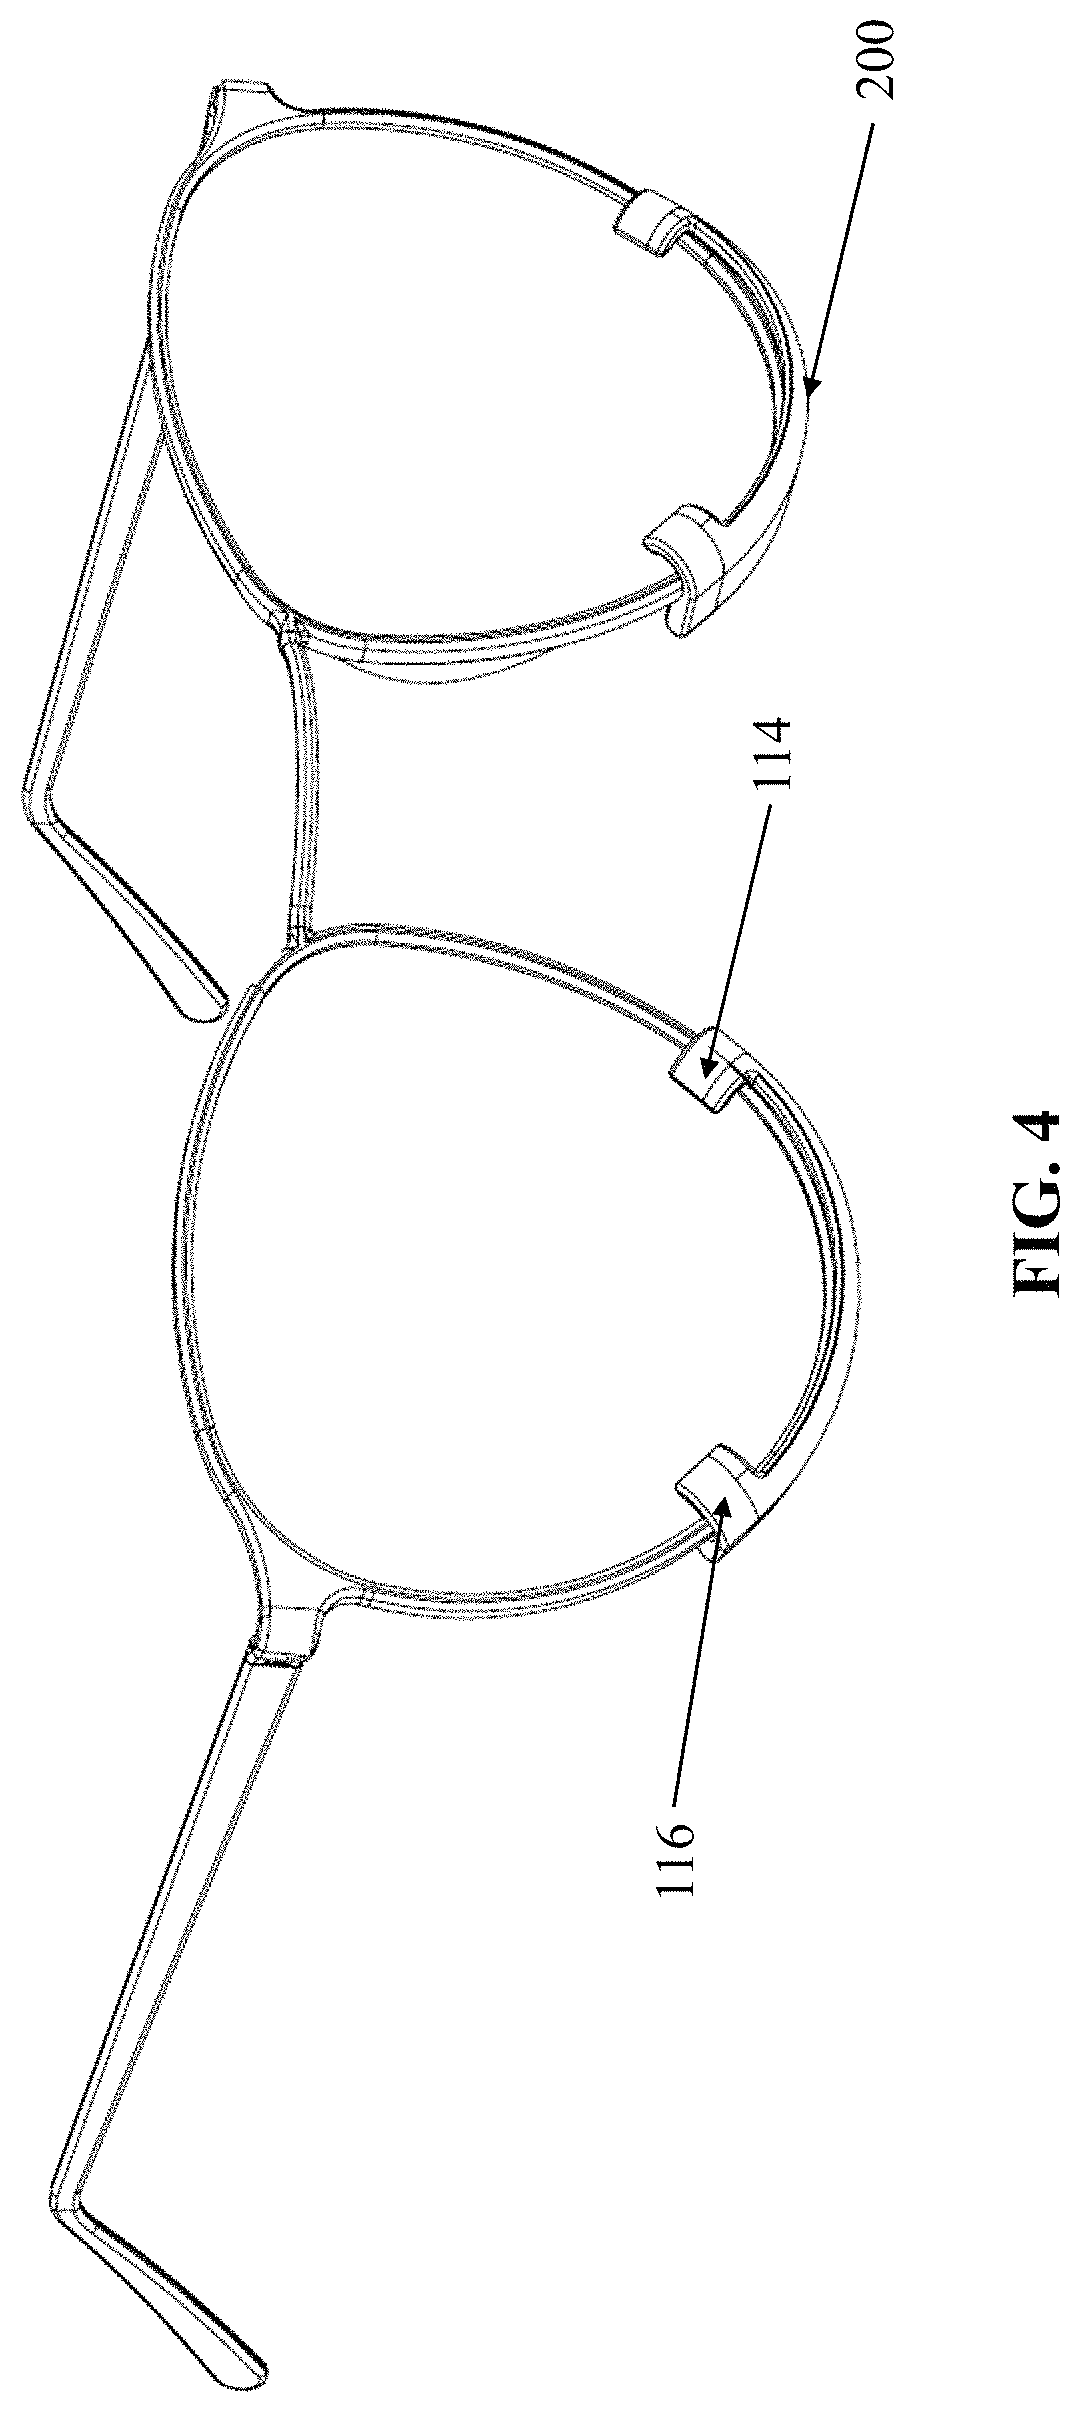 Anti-fog and anti-impact rim clip for eye glasses